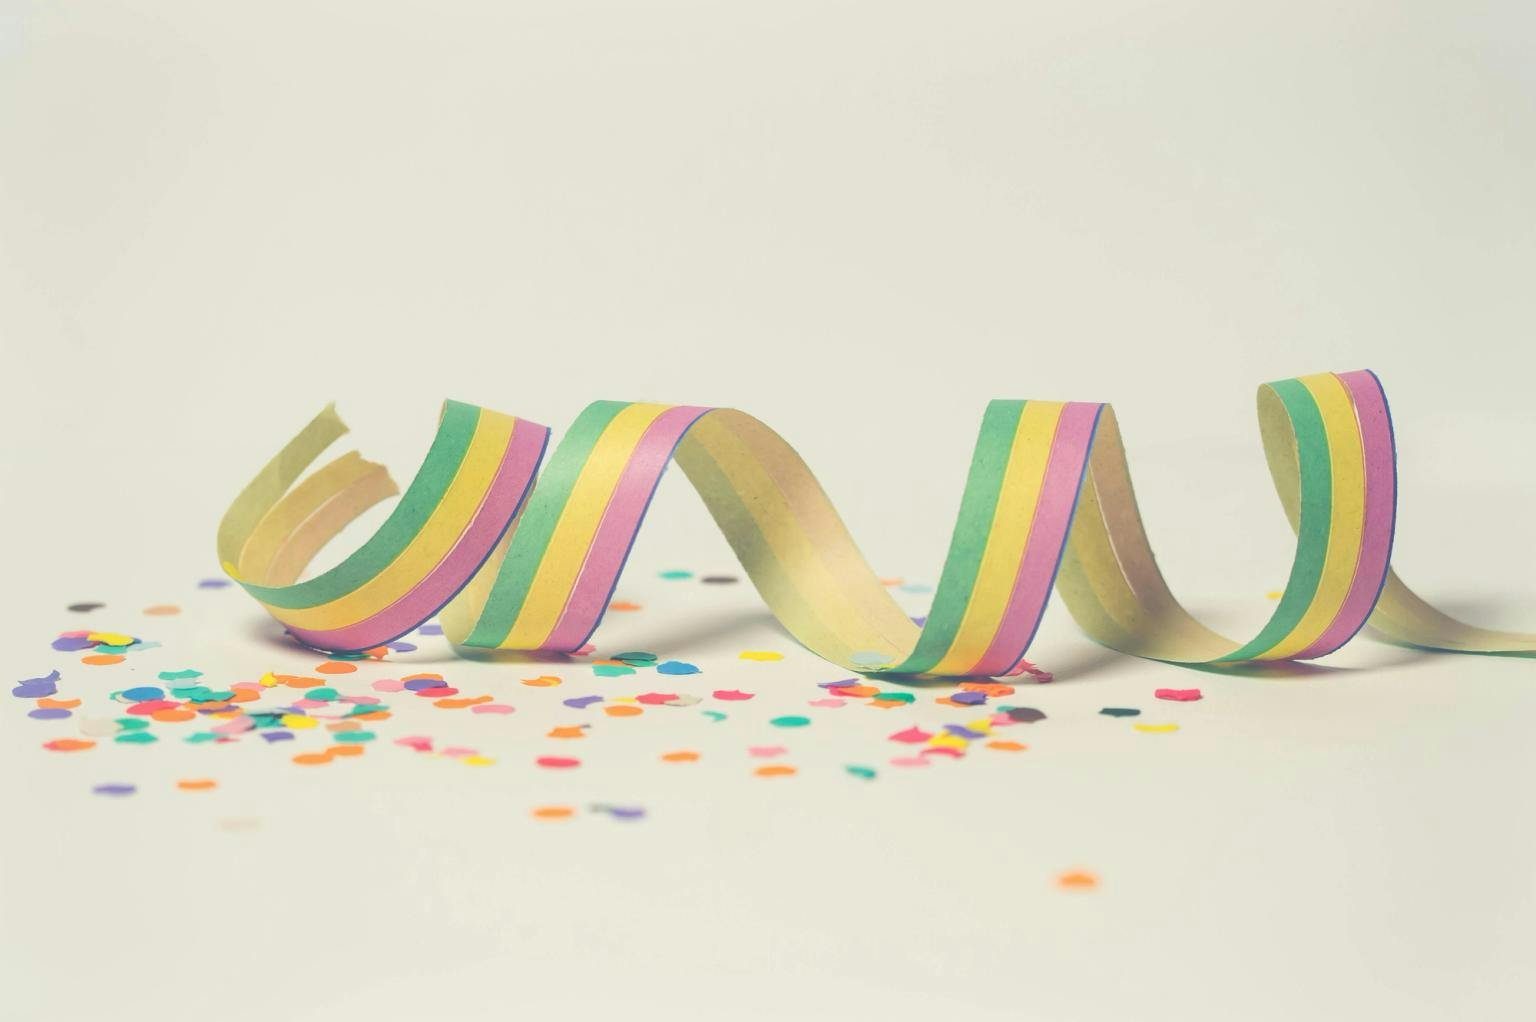 A rainbow party streamer and confetti against a plain backgroud.